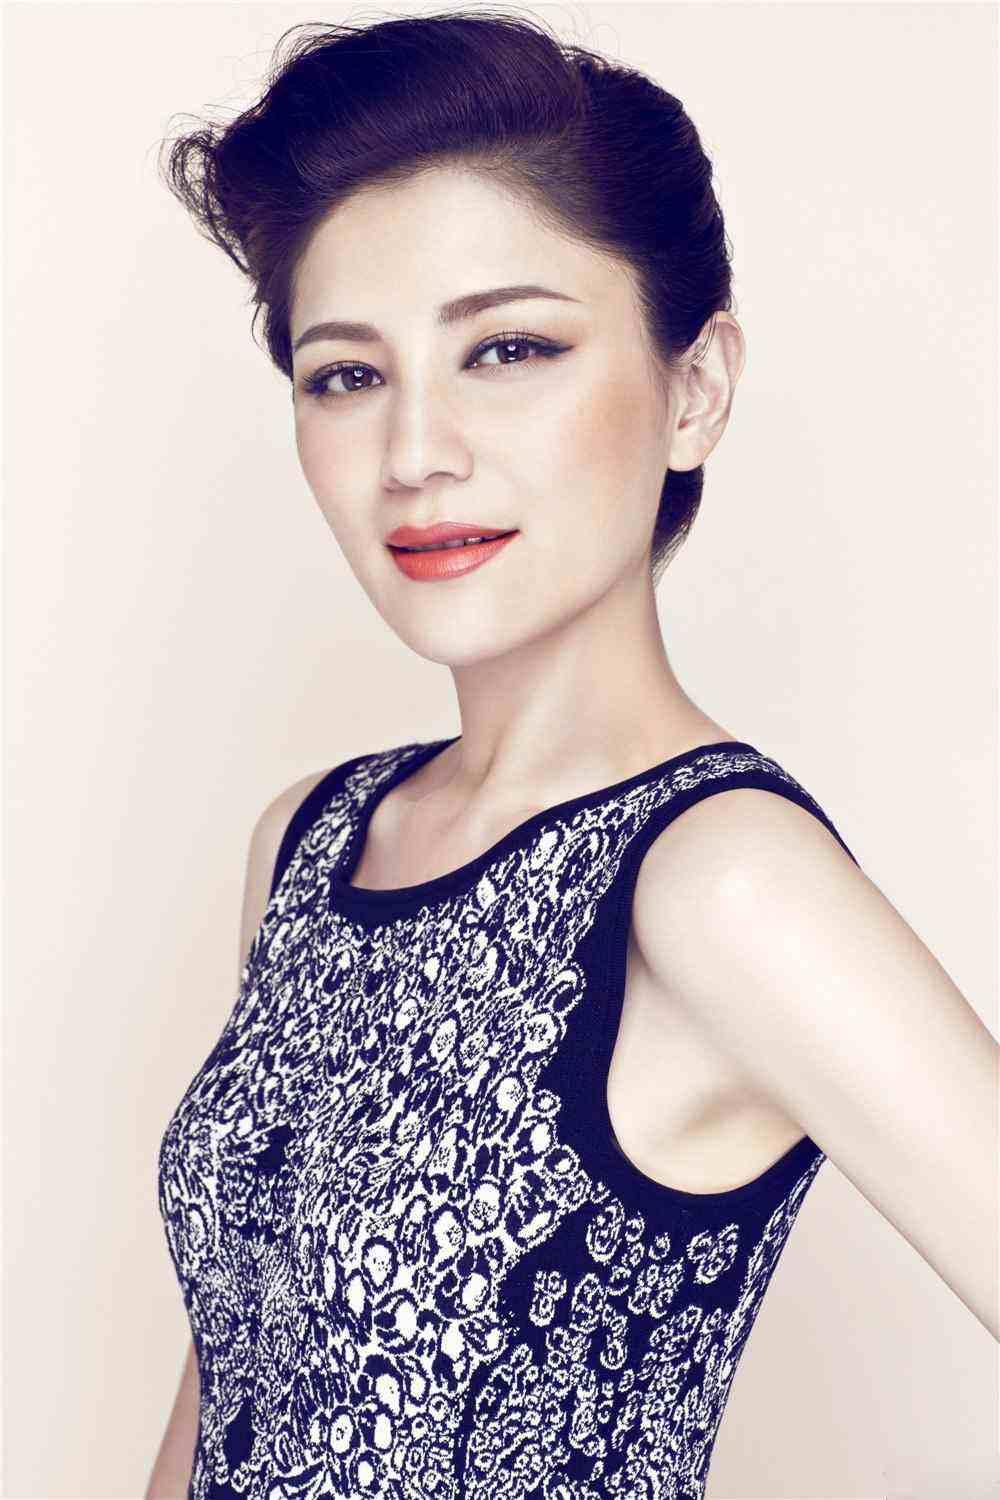 Hu Ke, sexy and charming photo (photo gallery) - iNEWS